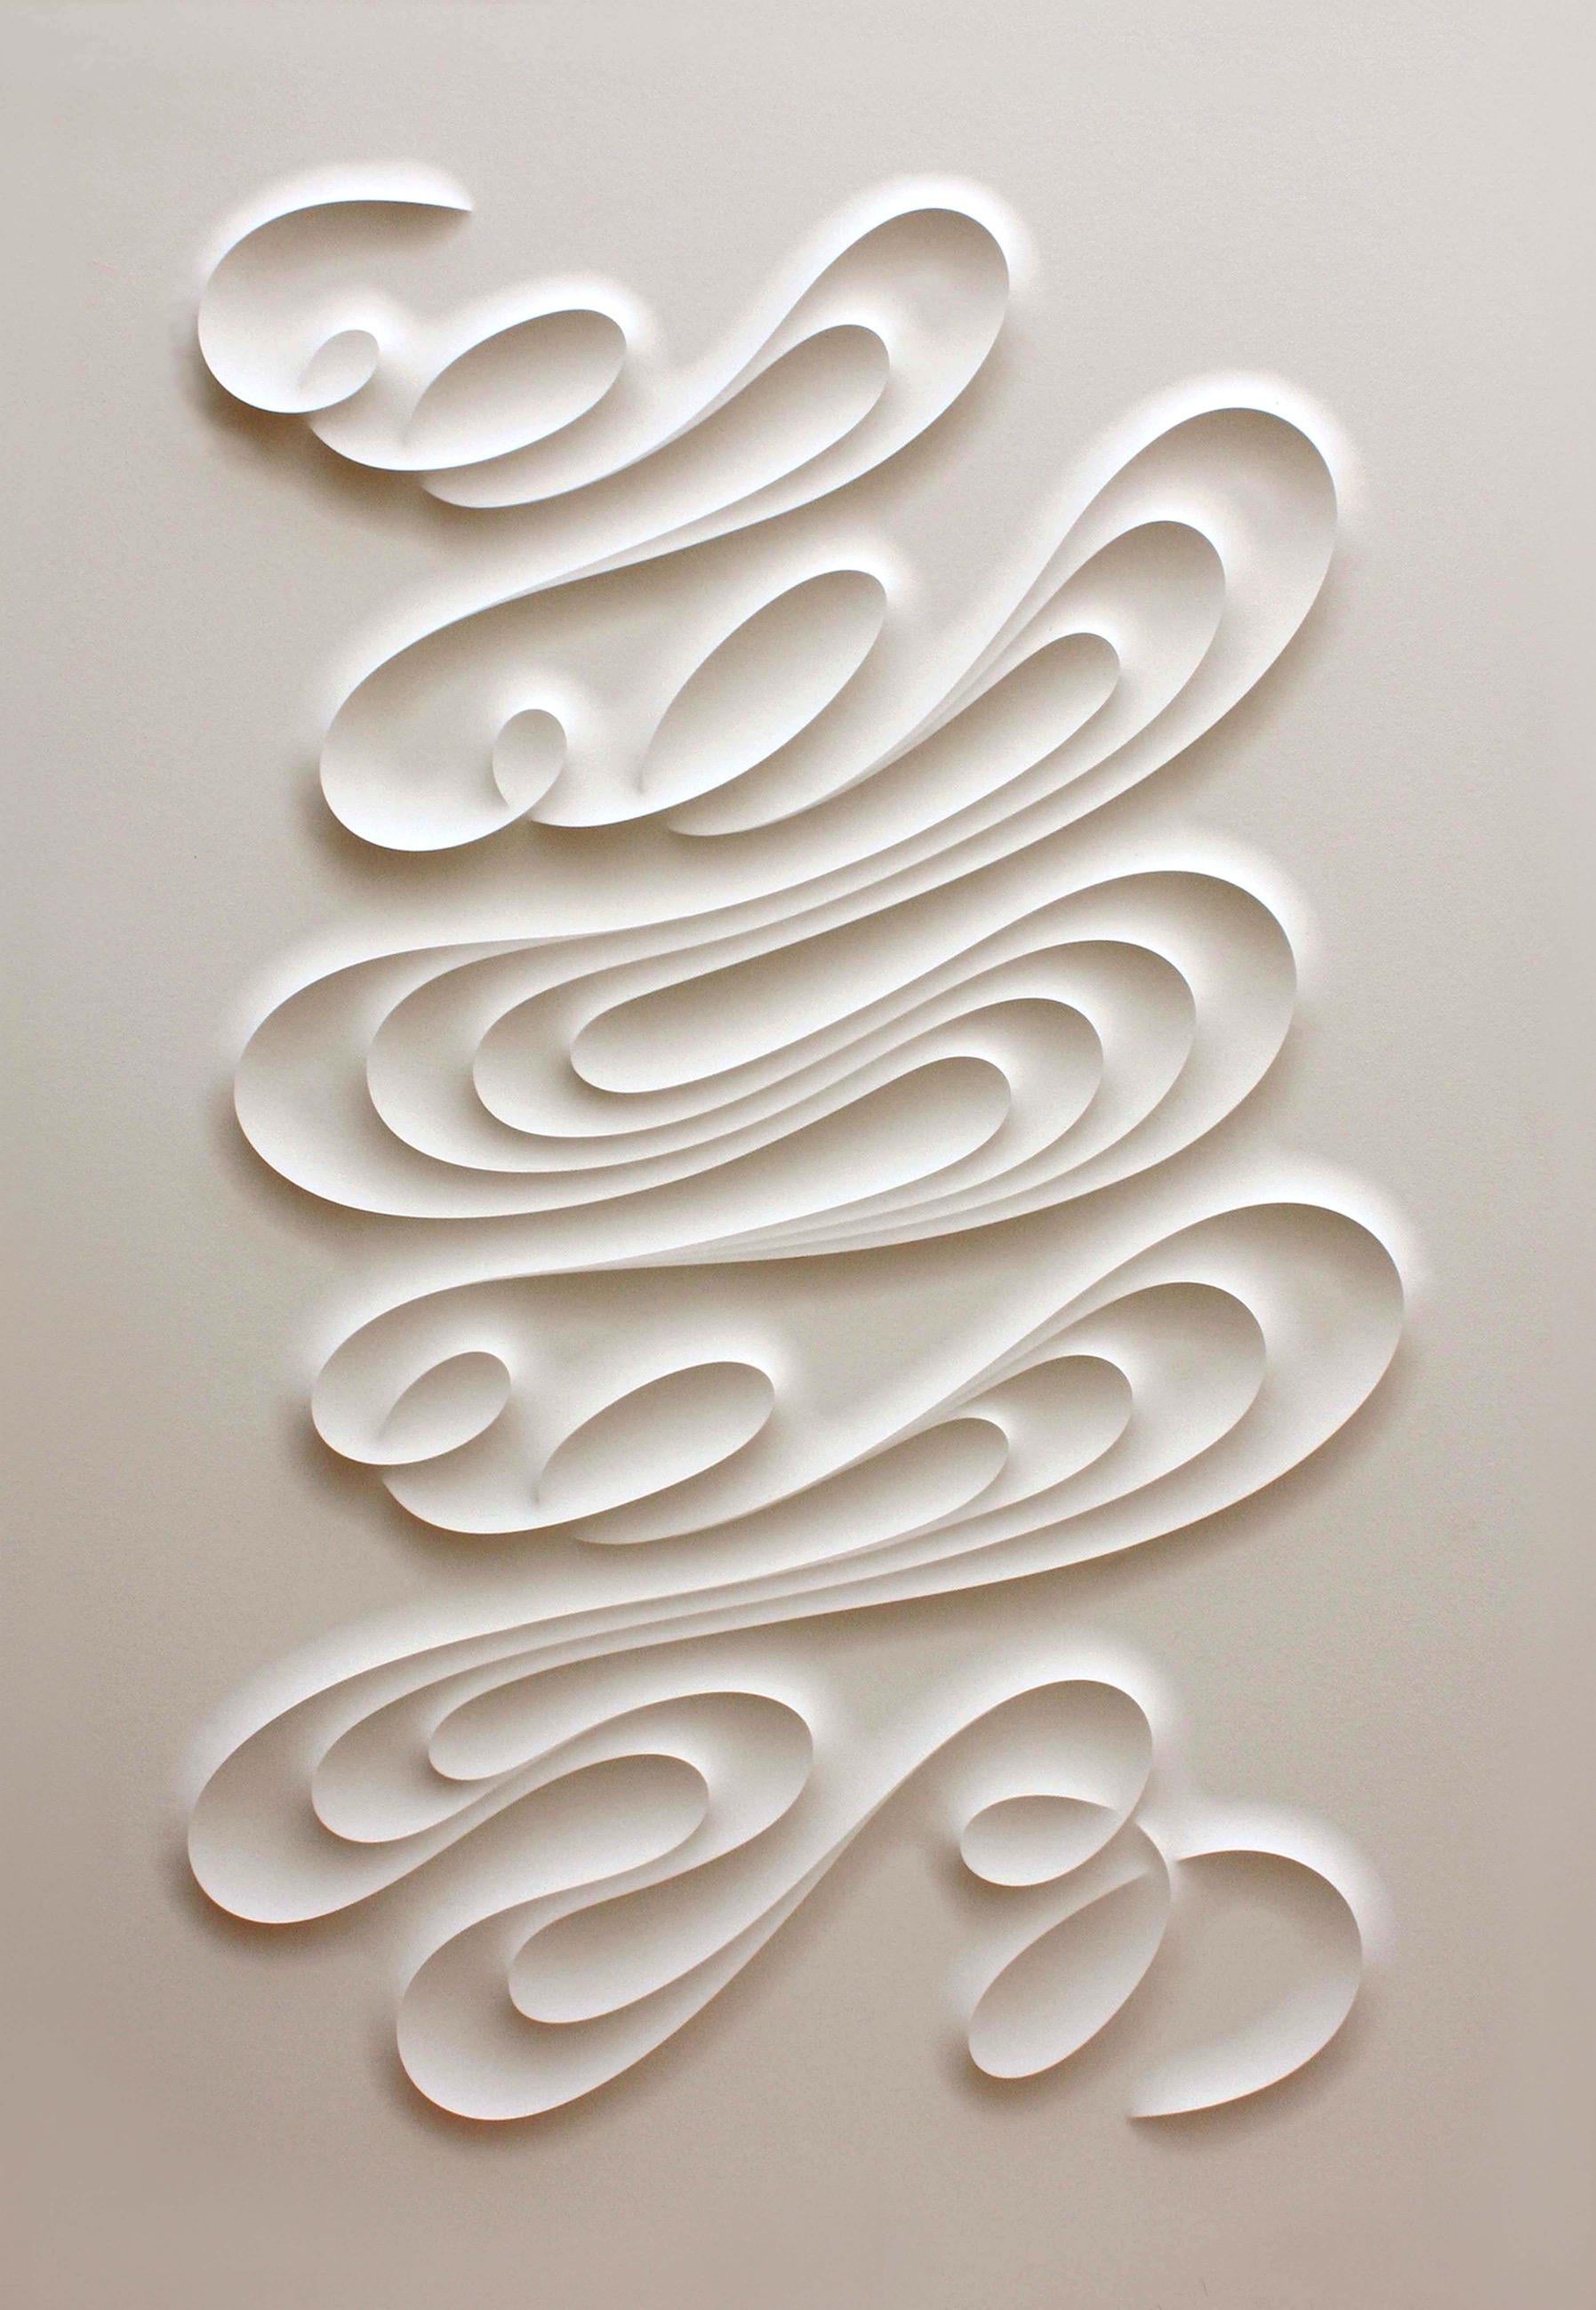 FESCM - embossed paper work, minimalist curvilinear white artwork Jacinto Moros